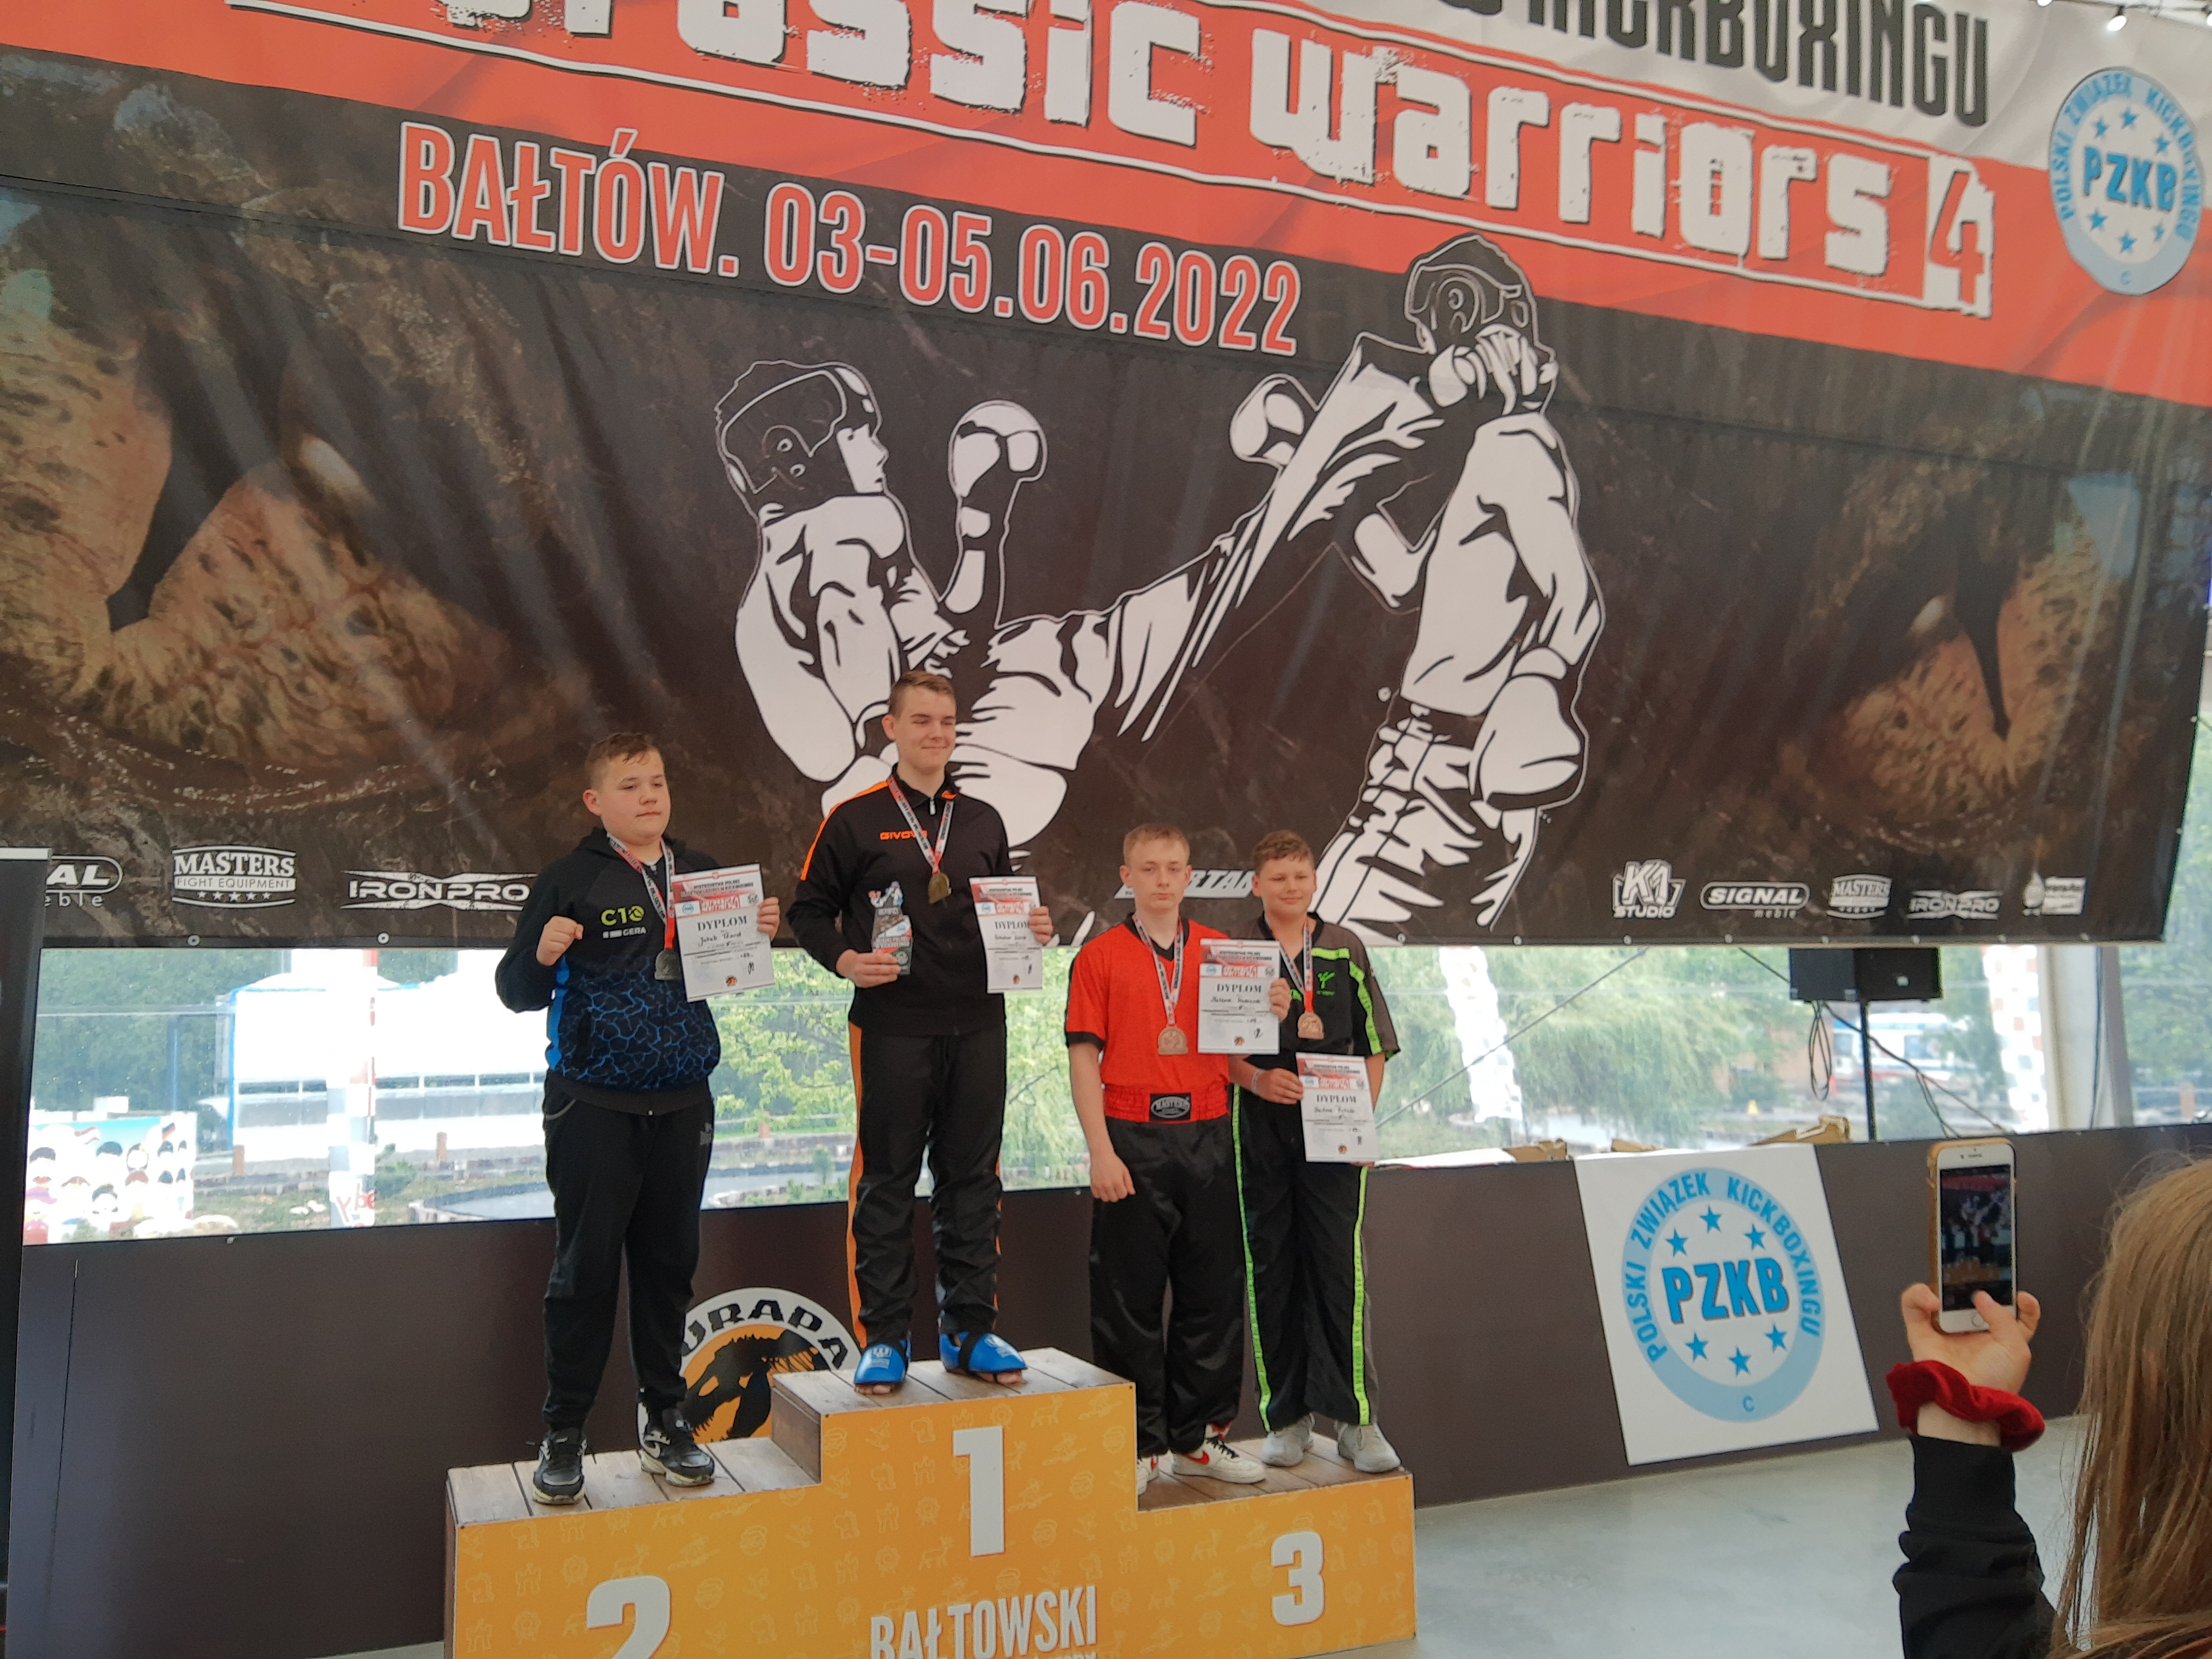 Mateusz_ledziewski-podium-3m.jpg - 3.49 MB